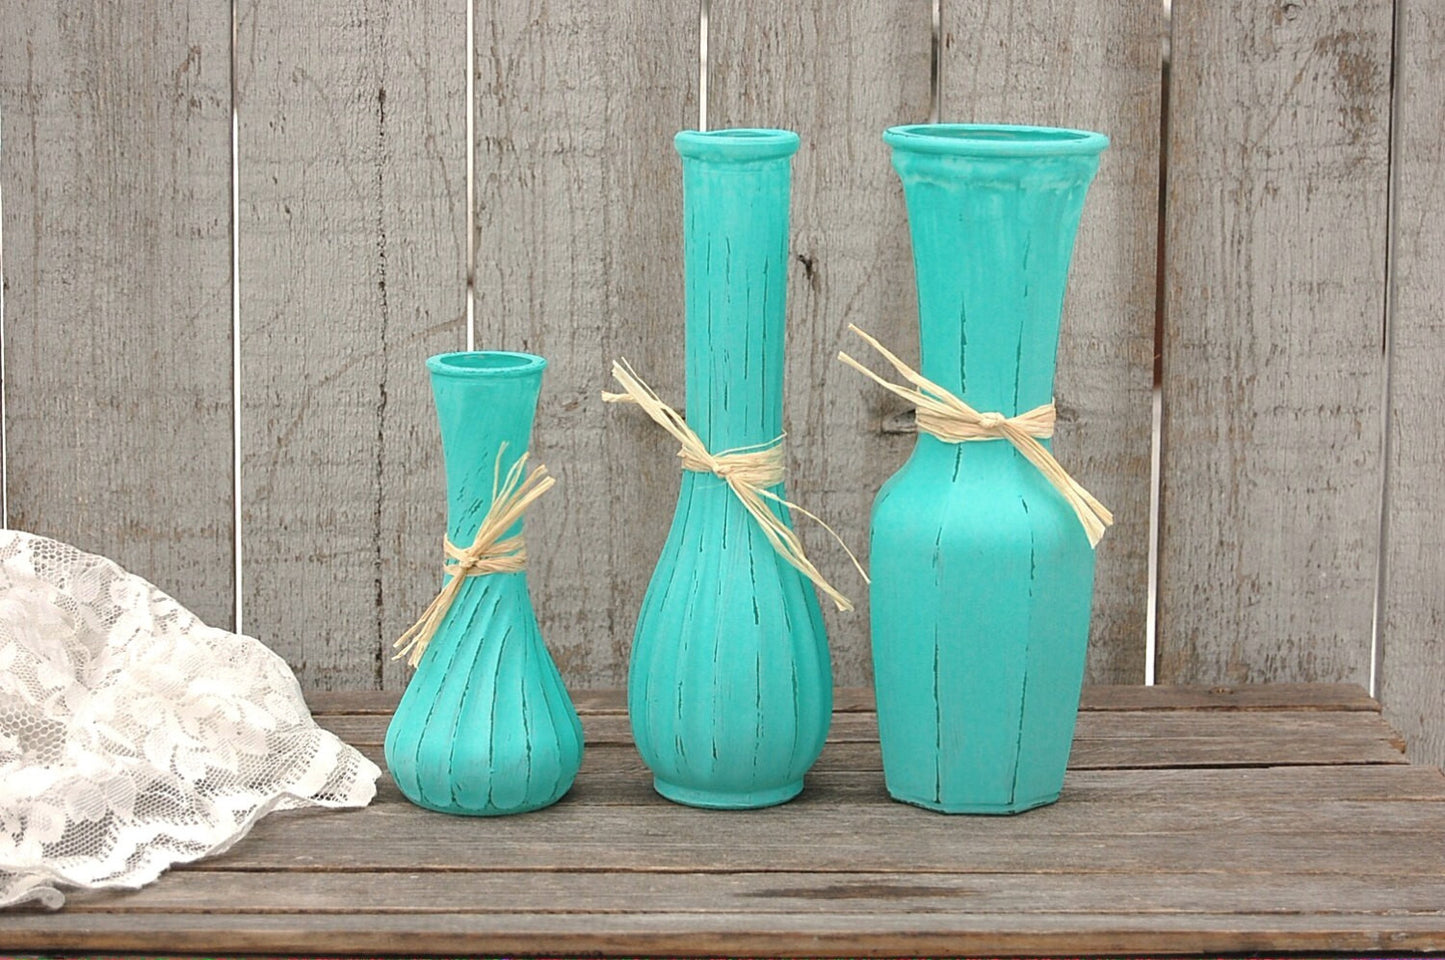 Aqua painted vases - The Vintage Artistry